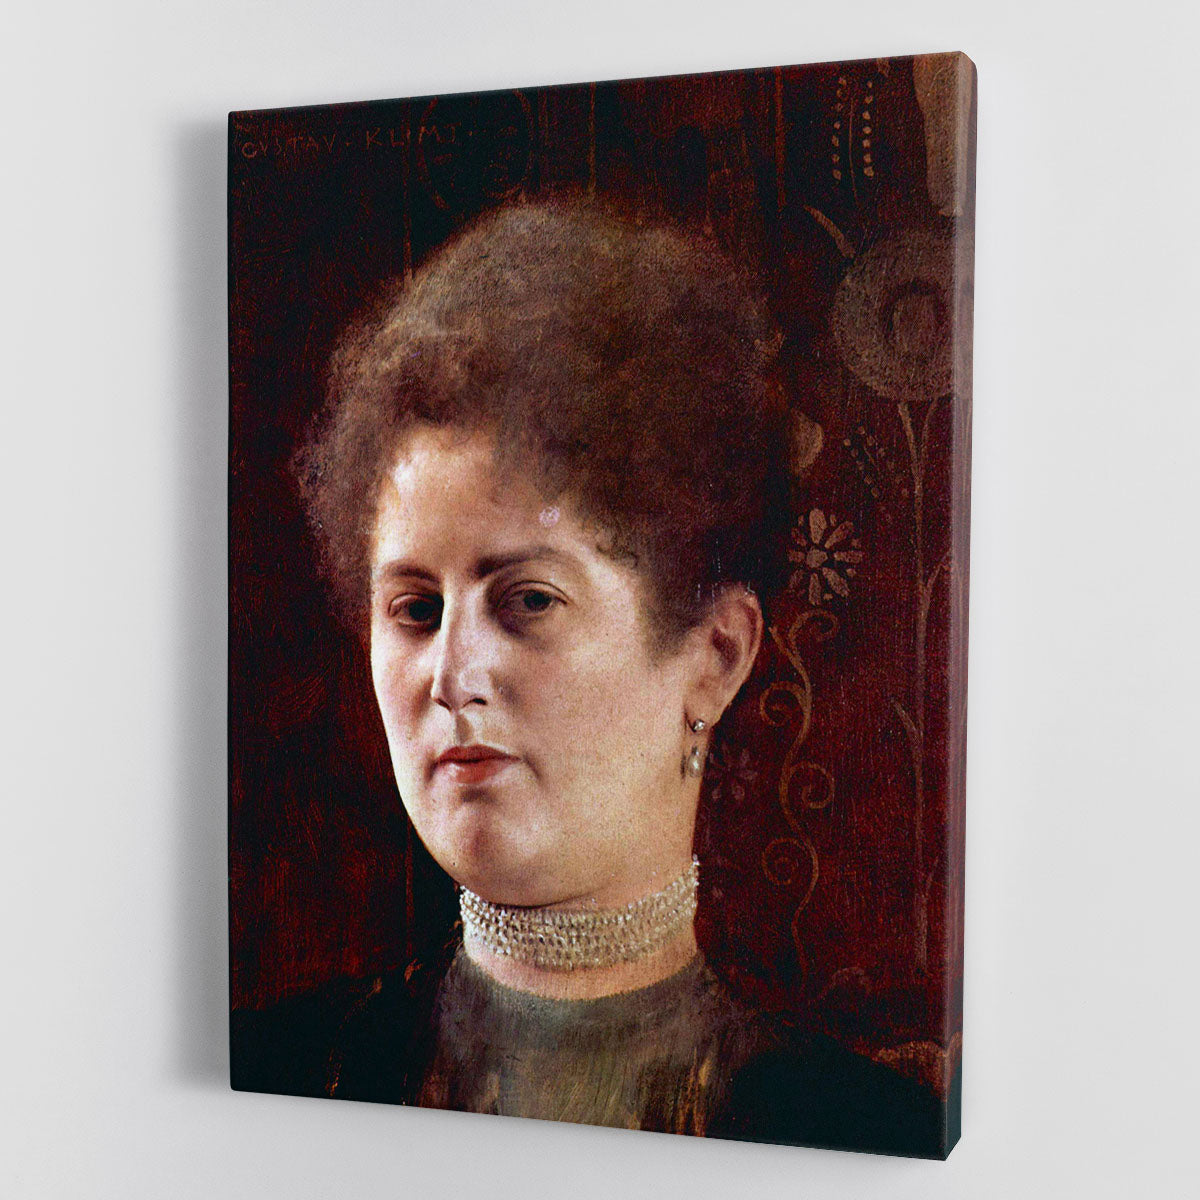 Portrai of a Woman by Klimt Canvas Print or Poster - Canvas Art Rocks - 1